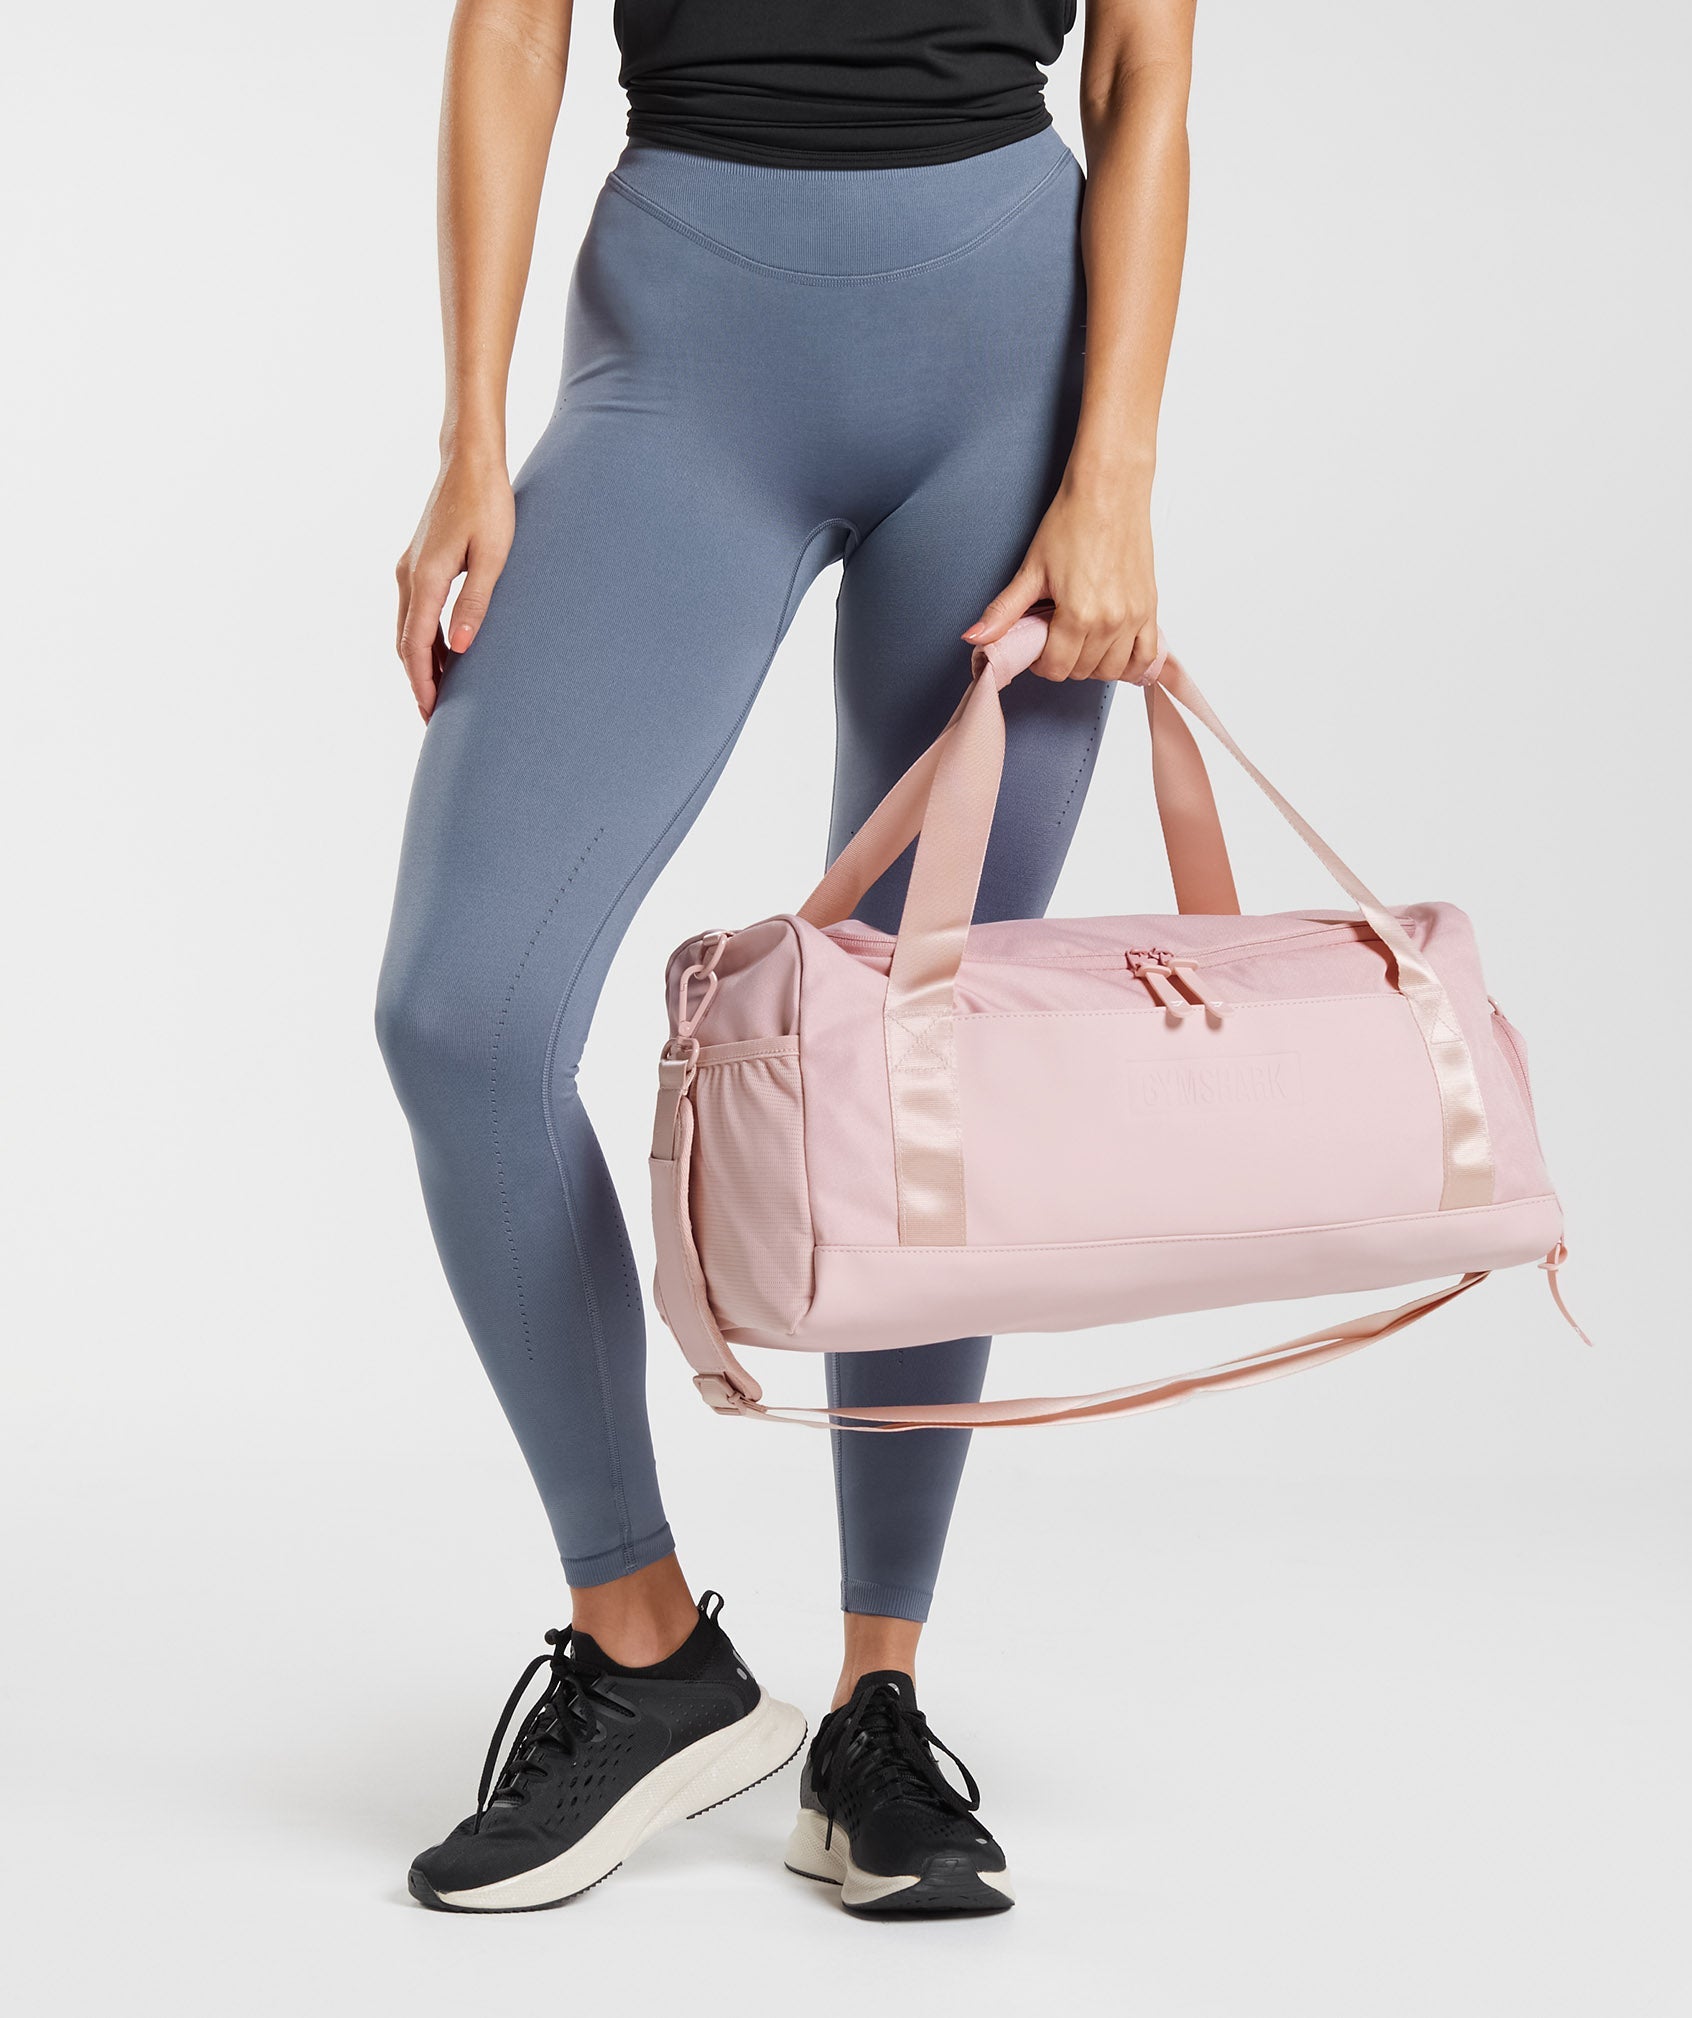 Workout Essentials For Women Gym Bag Essentials From Gymshark